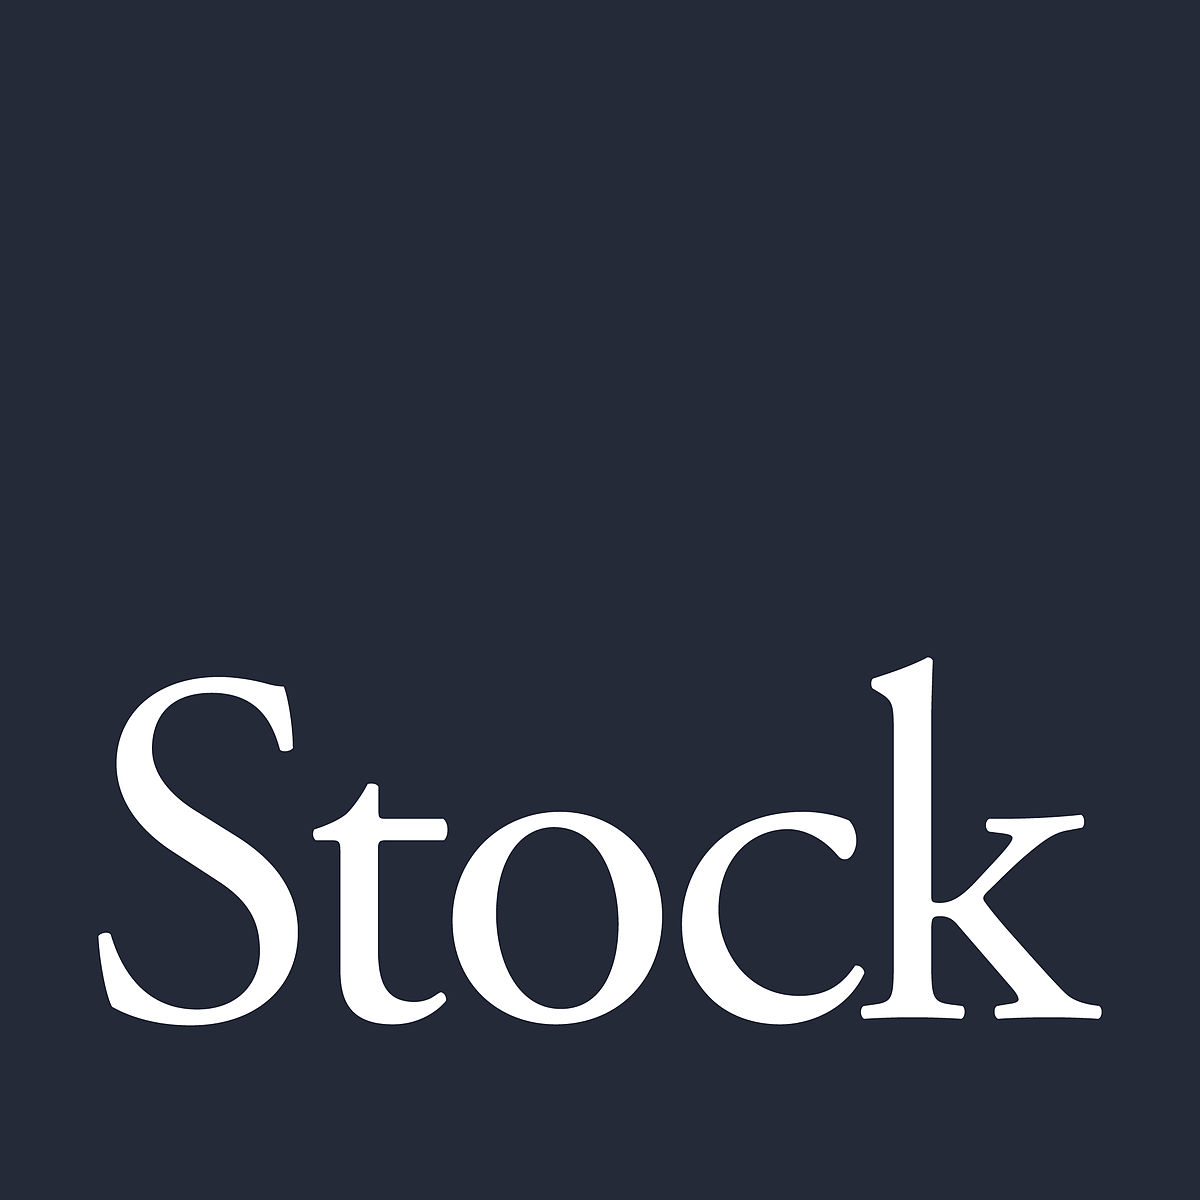 Editions-stock-logo